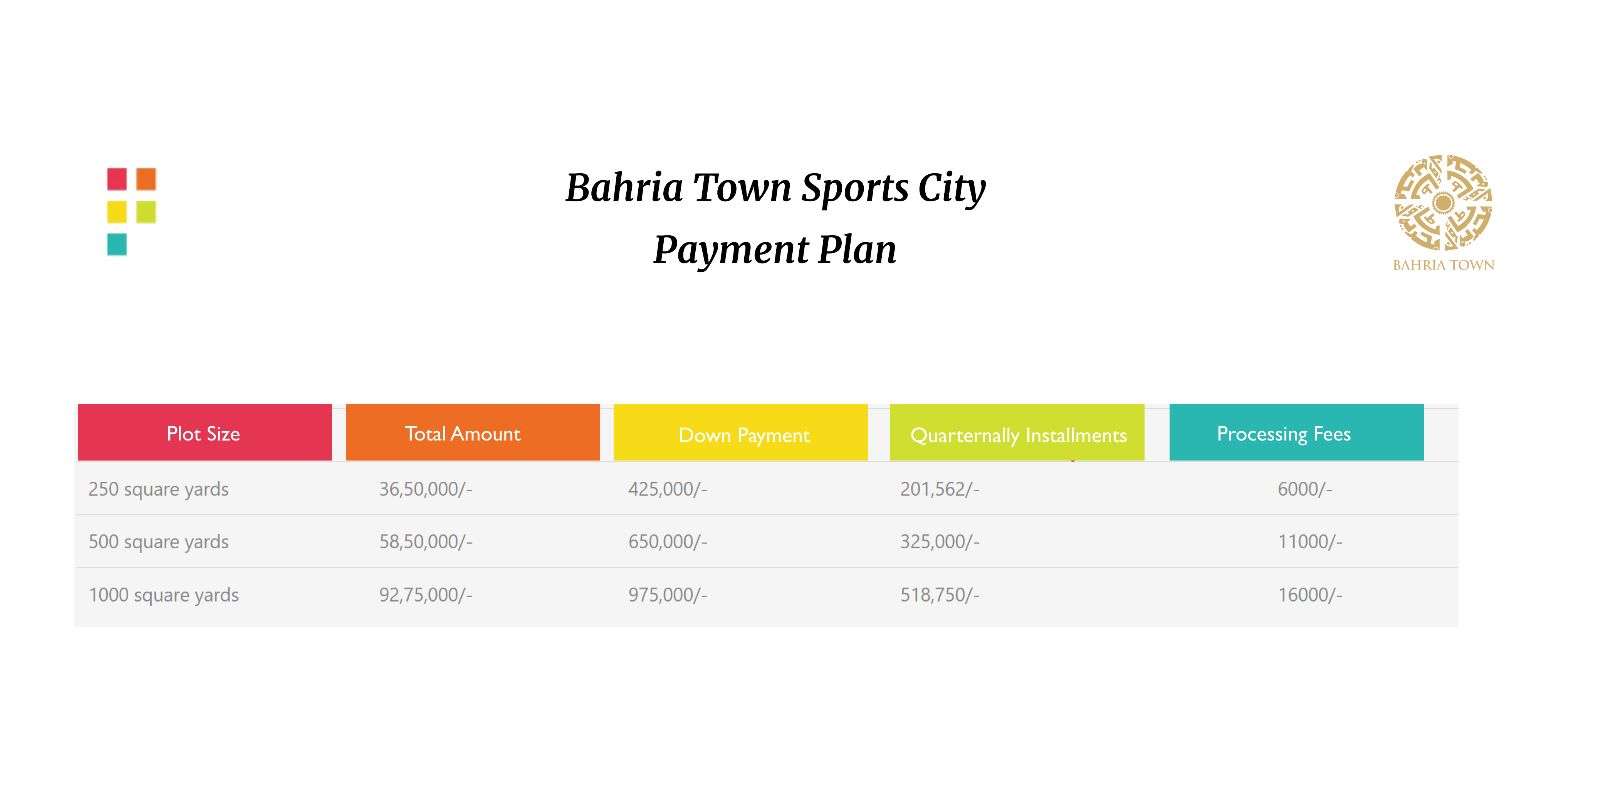 Payment Plan of Bahria Sports City at Bahria Town Karachi